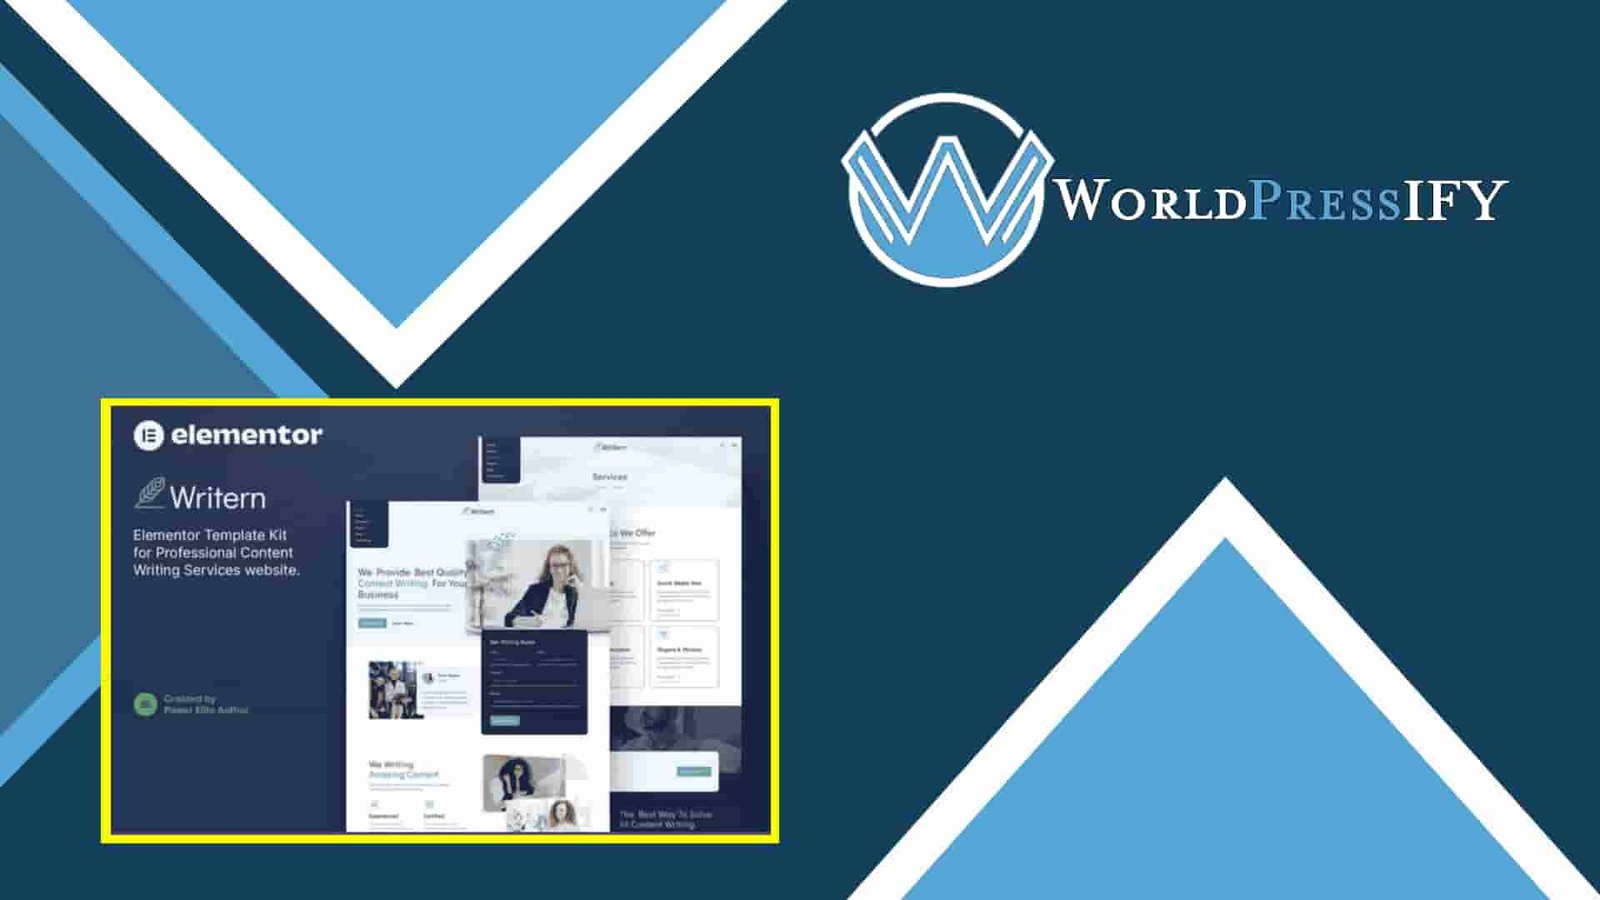 Writern – Content Writing Services Elementor Template Kit - WorldPress IFY